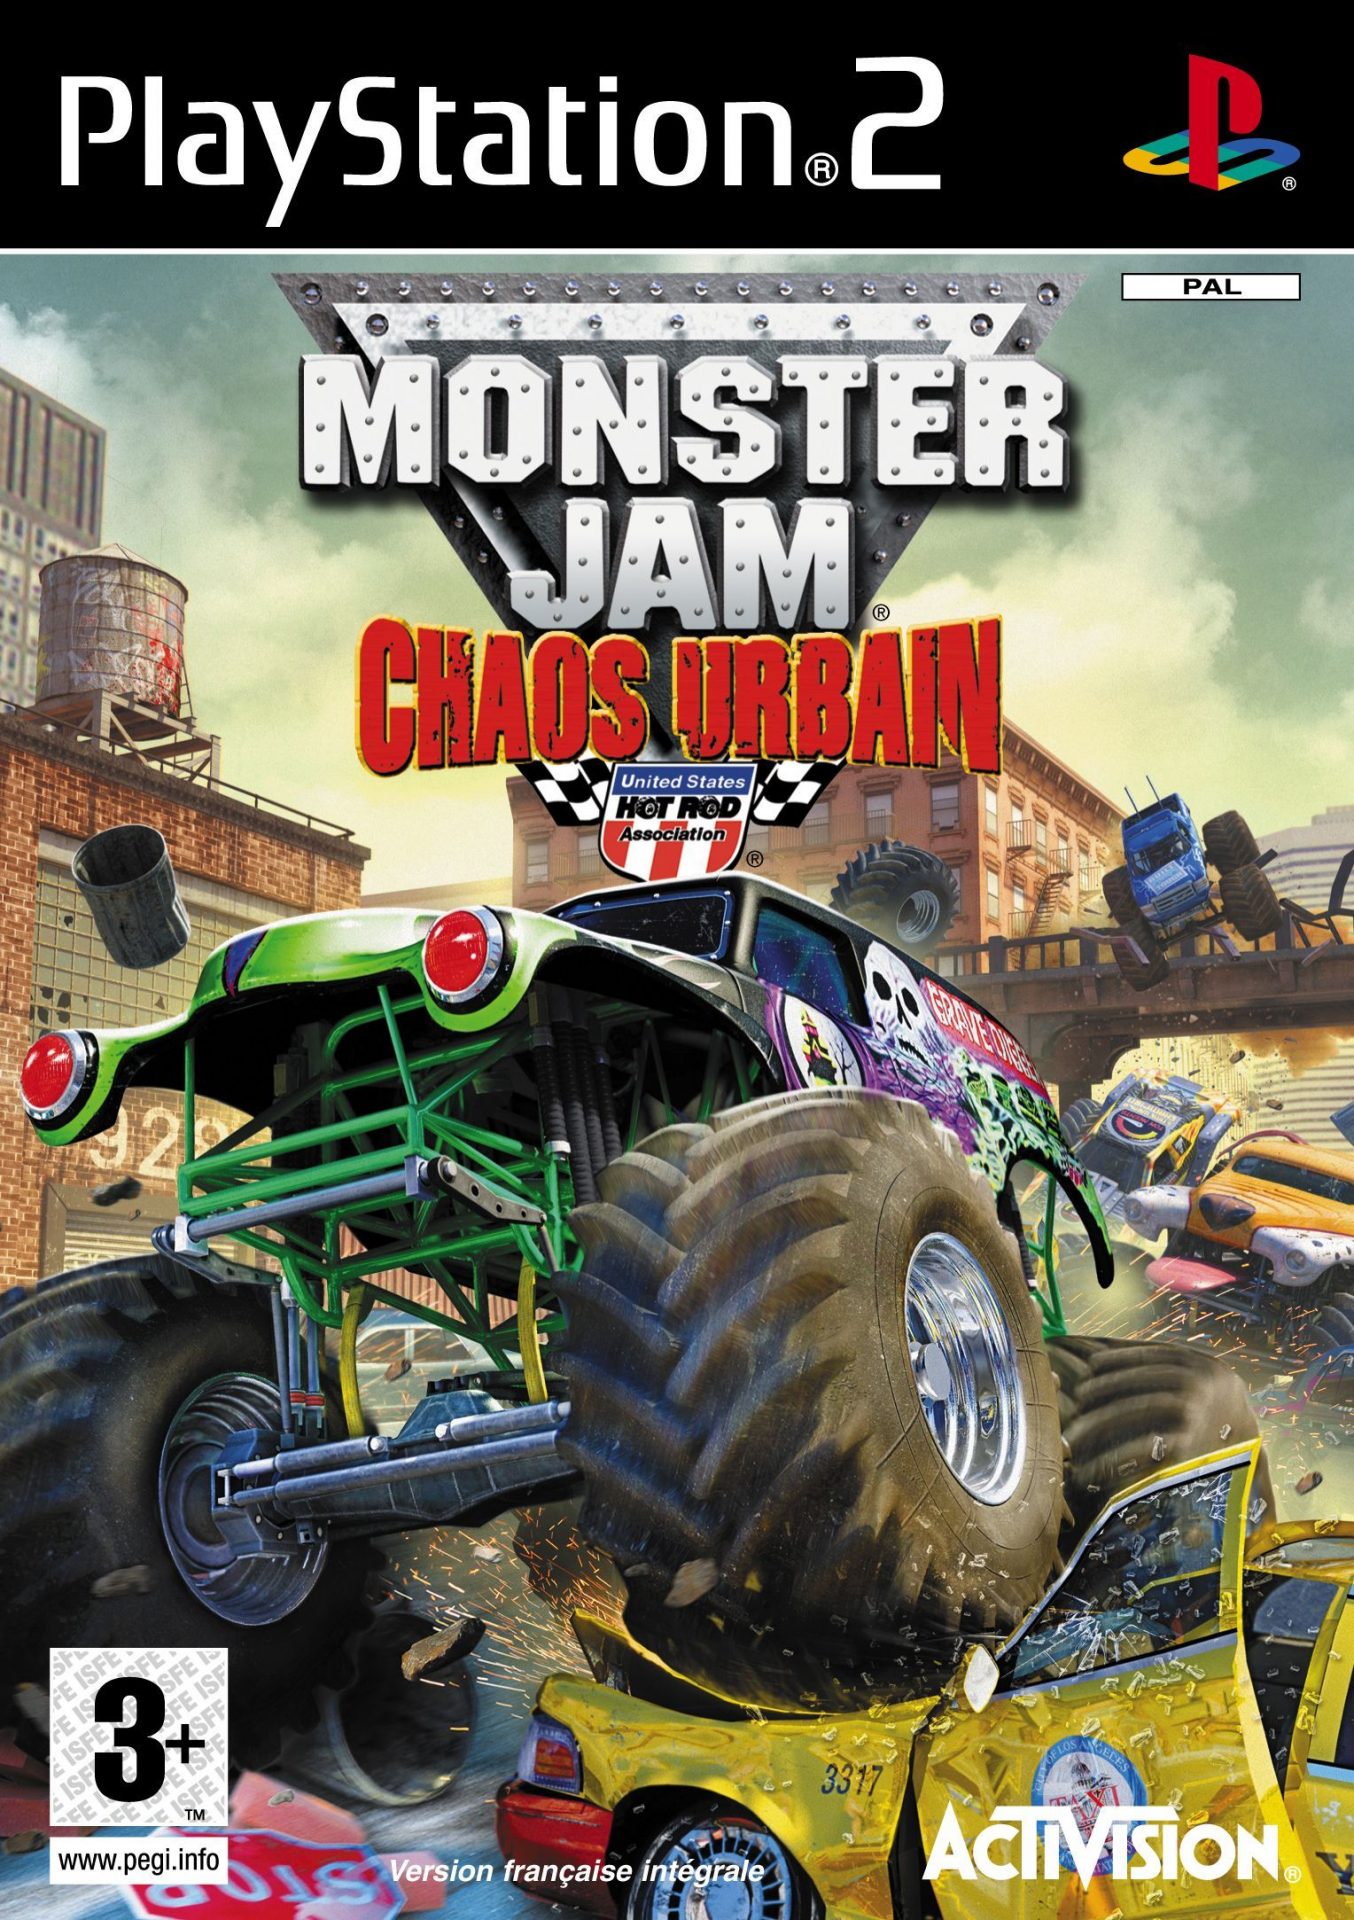 The coverart image of Monster Jam: Urban Assault